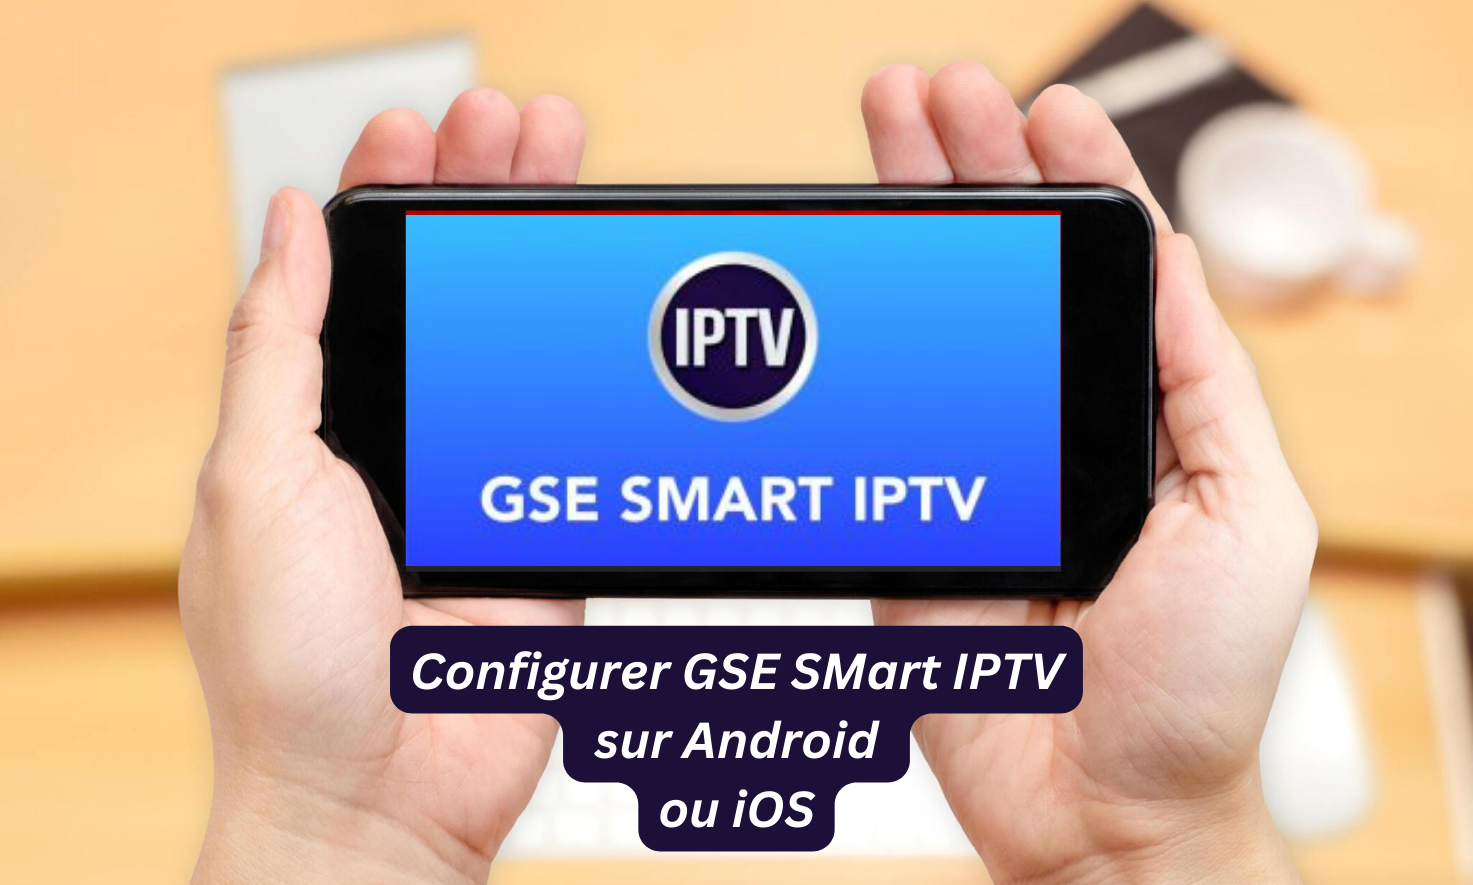 GSE SMart IPTV